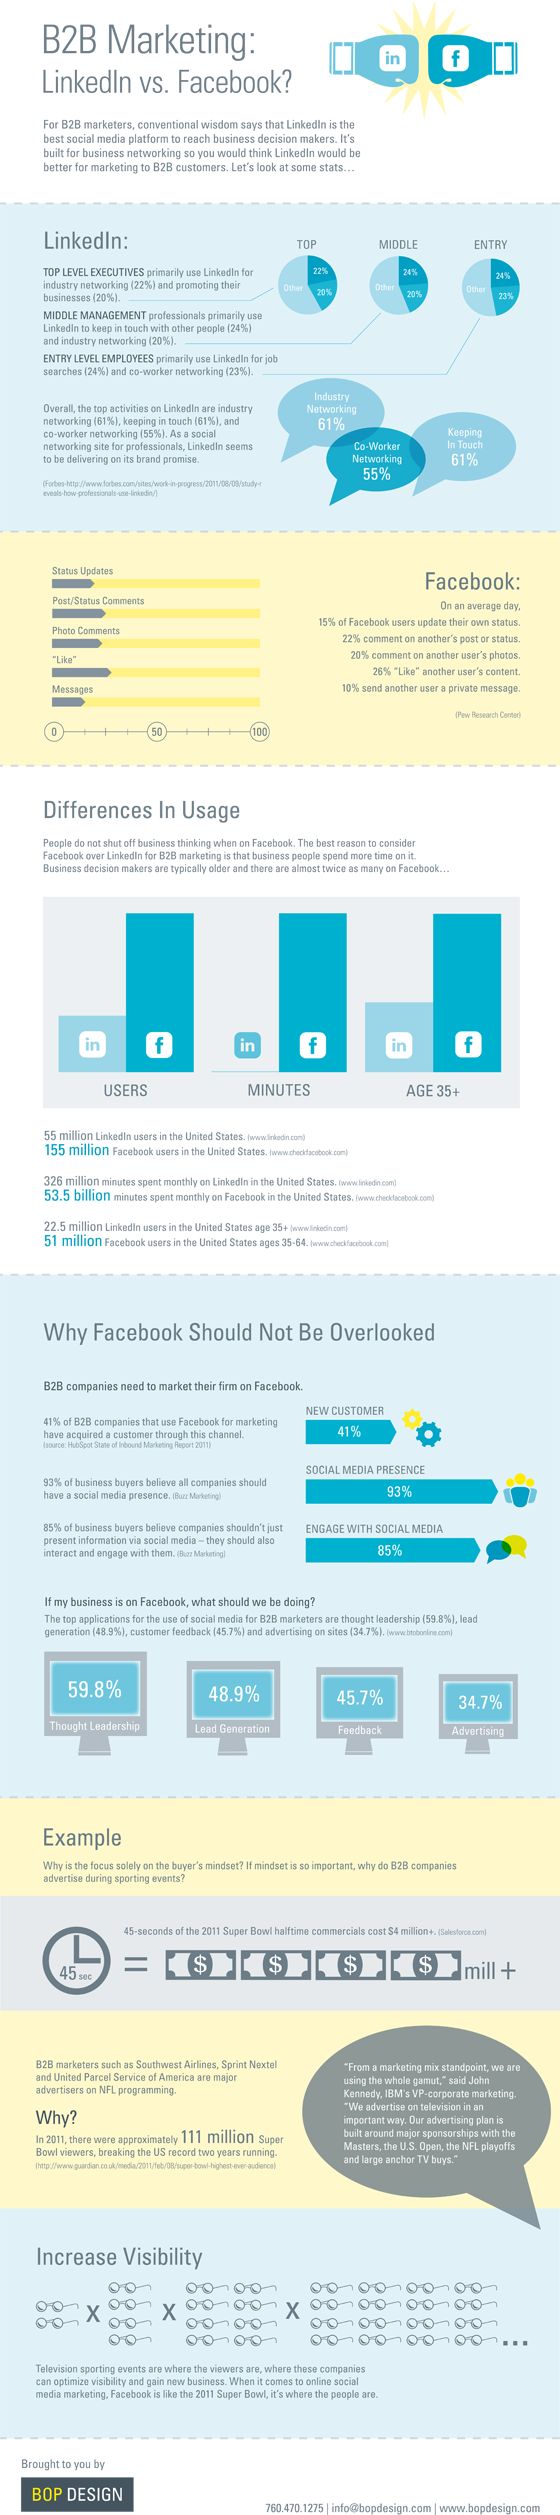 infographic-B2B-Facebook-Linkedin